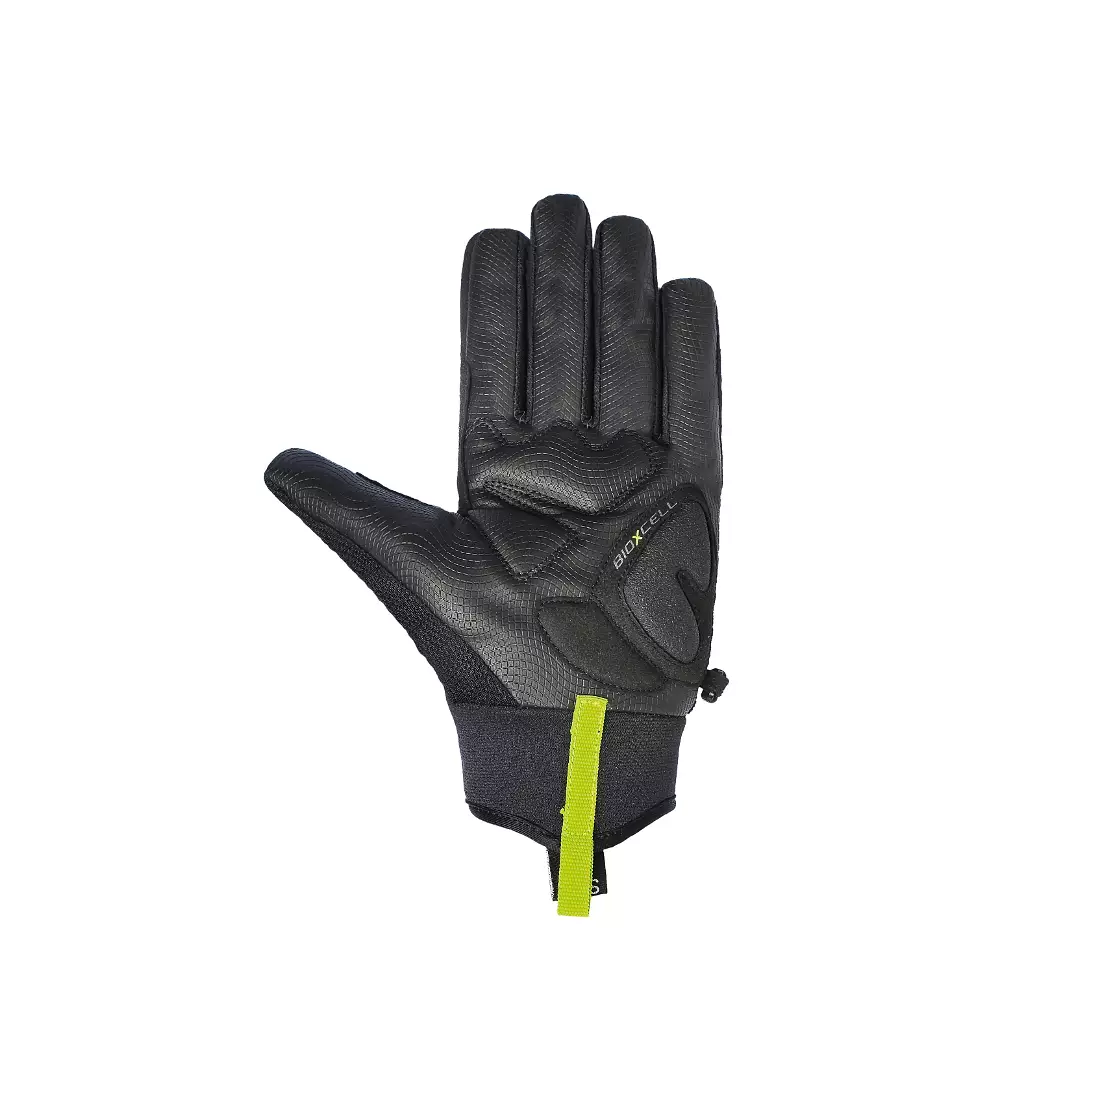 CHIBA BIOXCELL TOURING cycling gloves, black